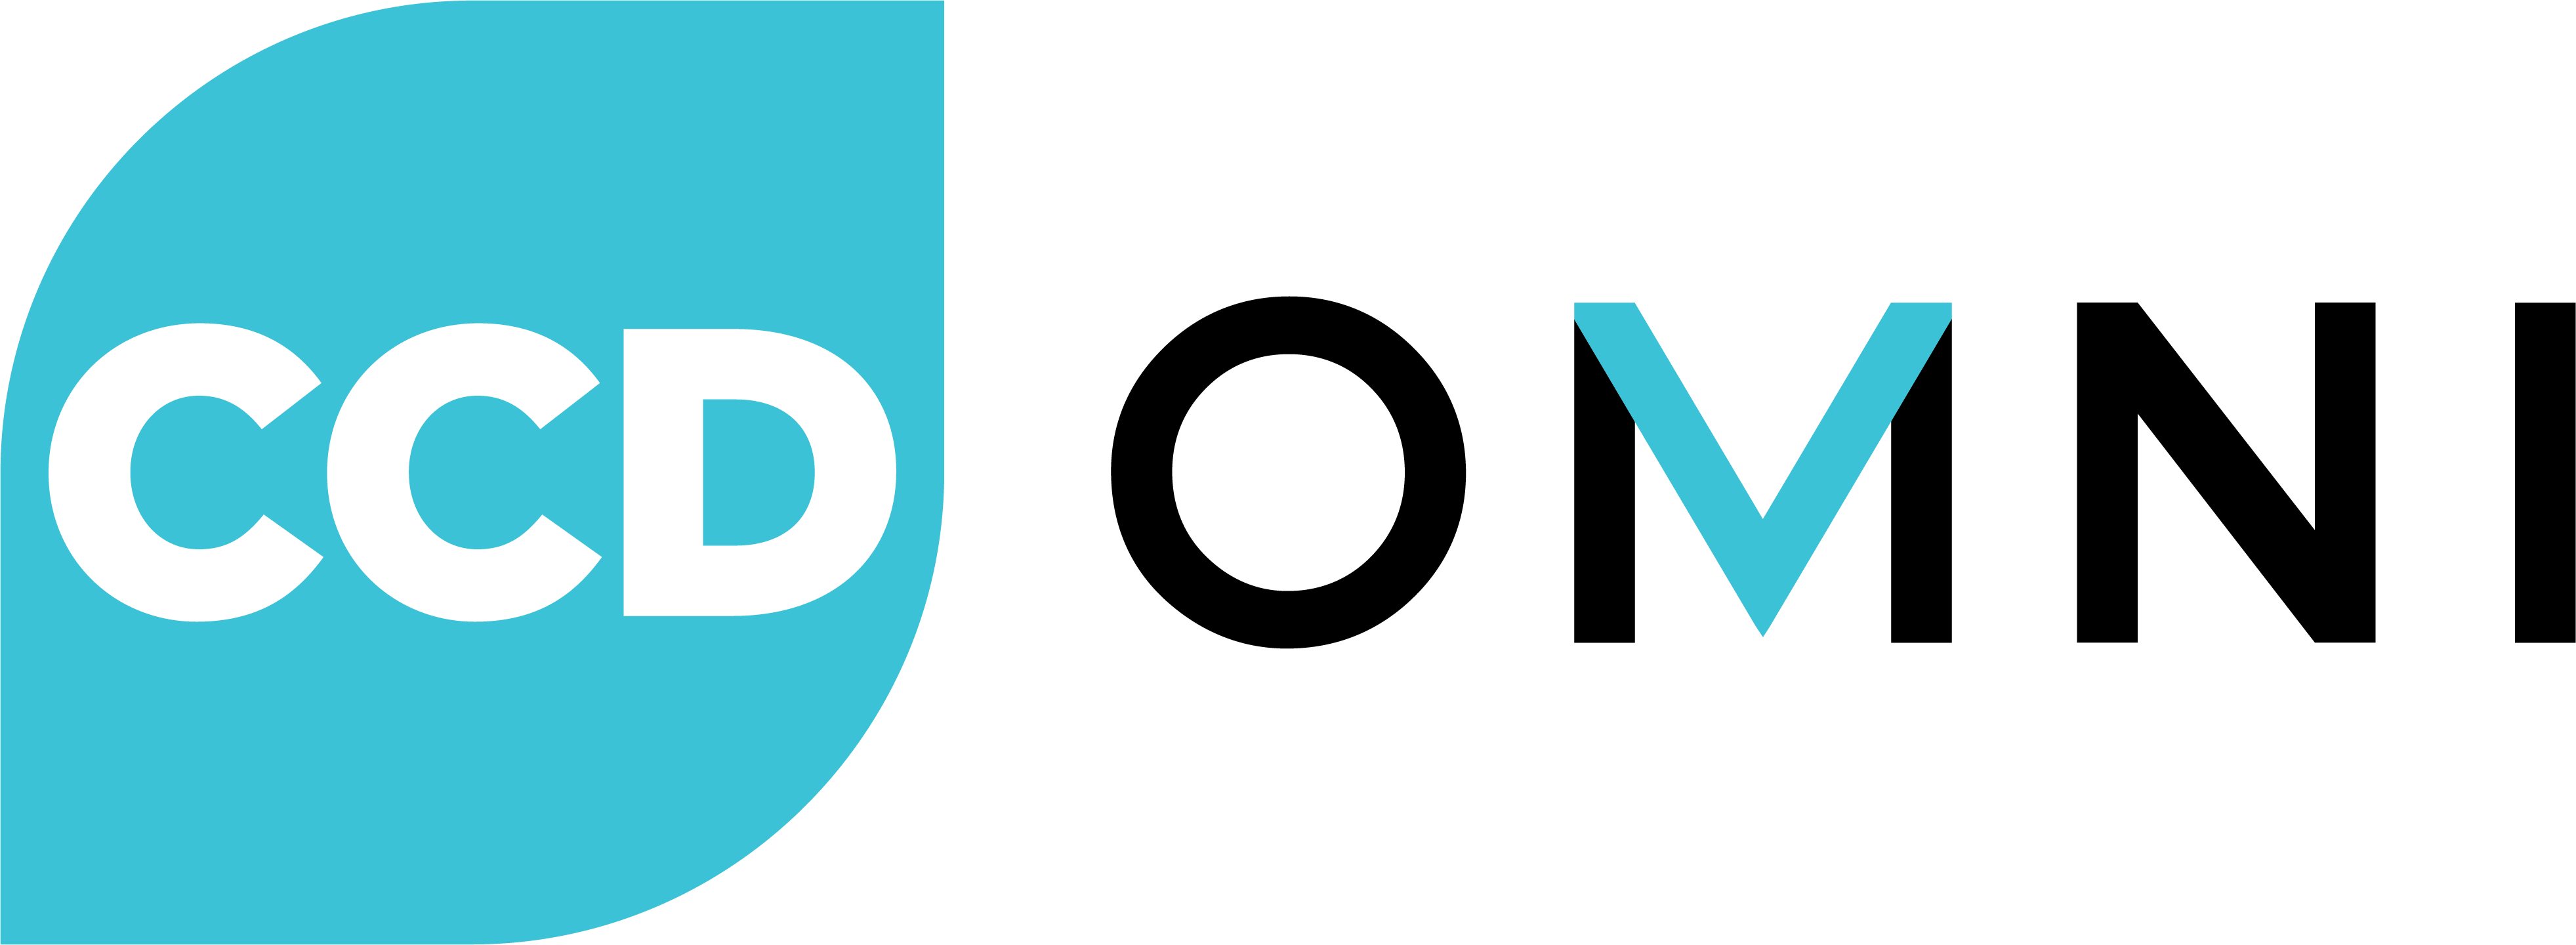 Premium Vector | Ccd study logo